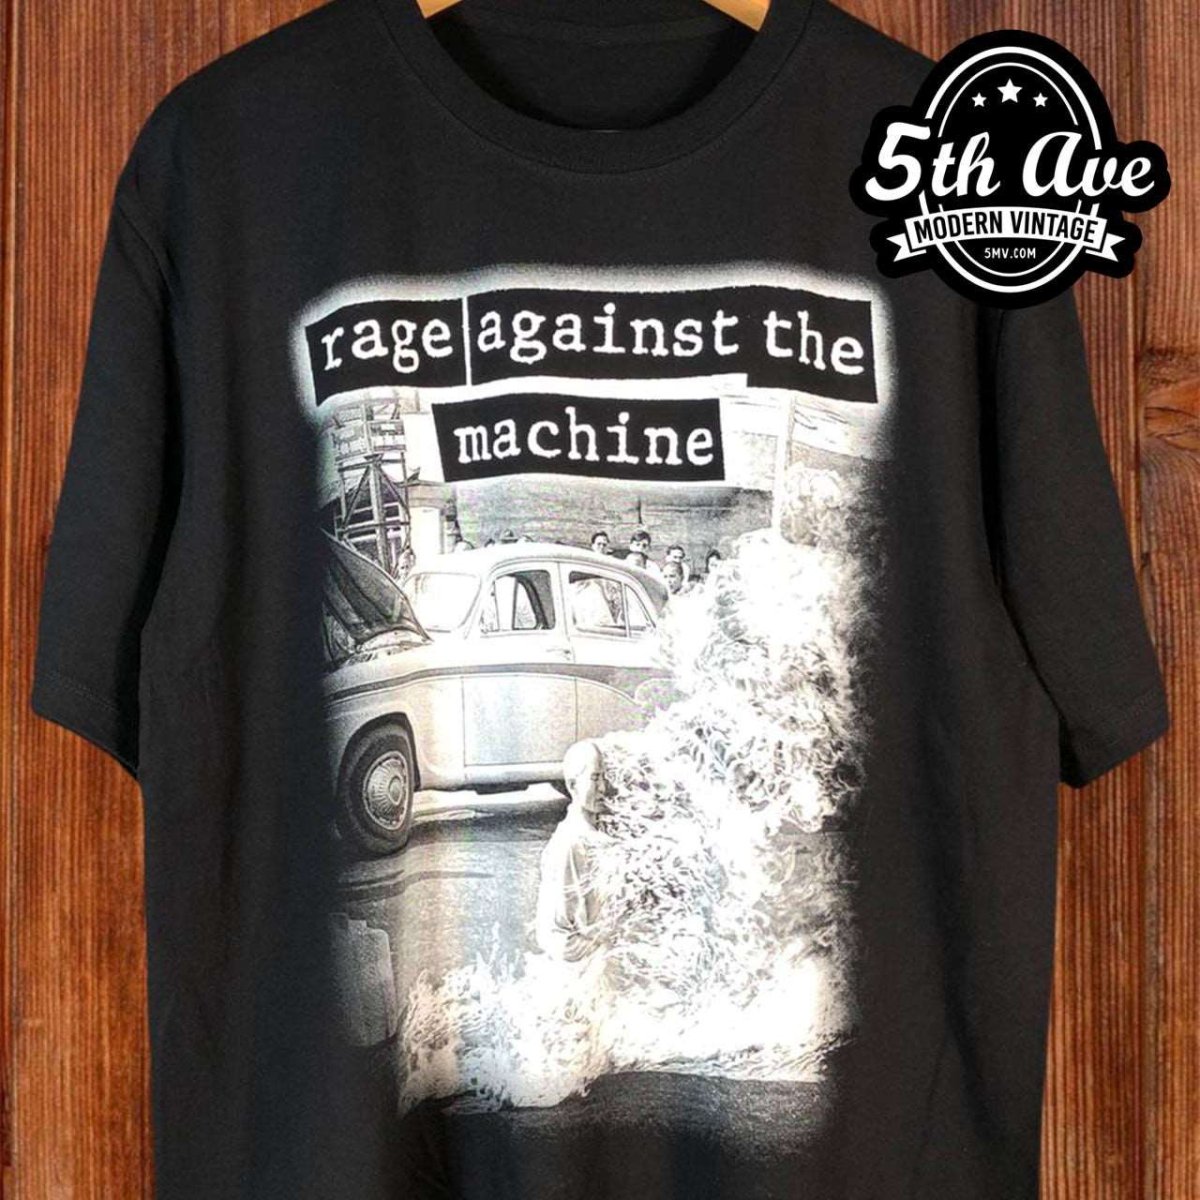 Rage Against the Machine Burning Monk - New Vintage Band T shirt - Vintage Band Shirts